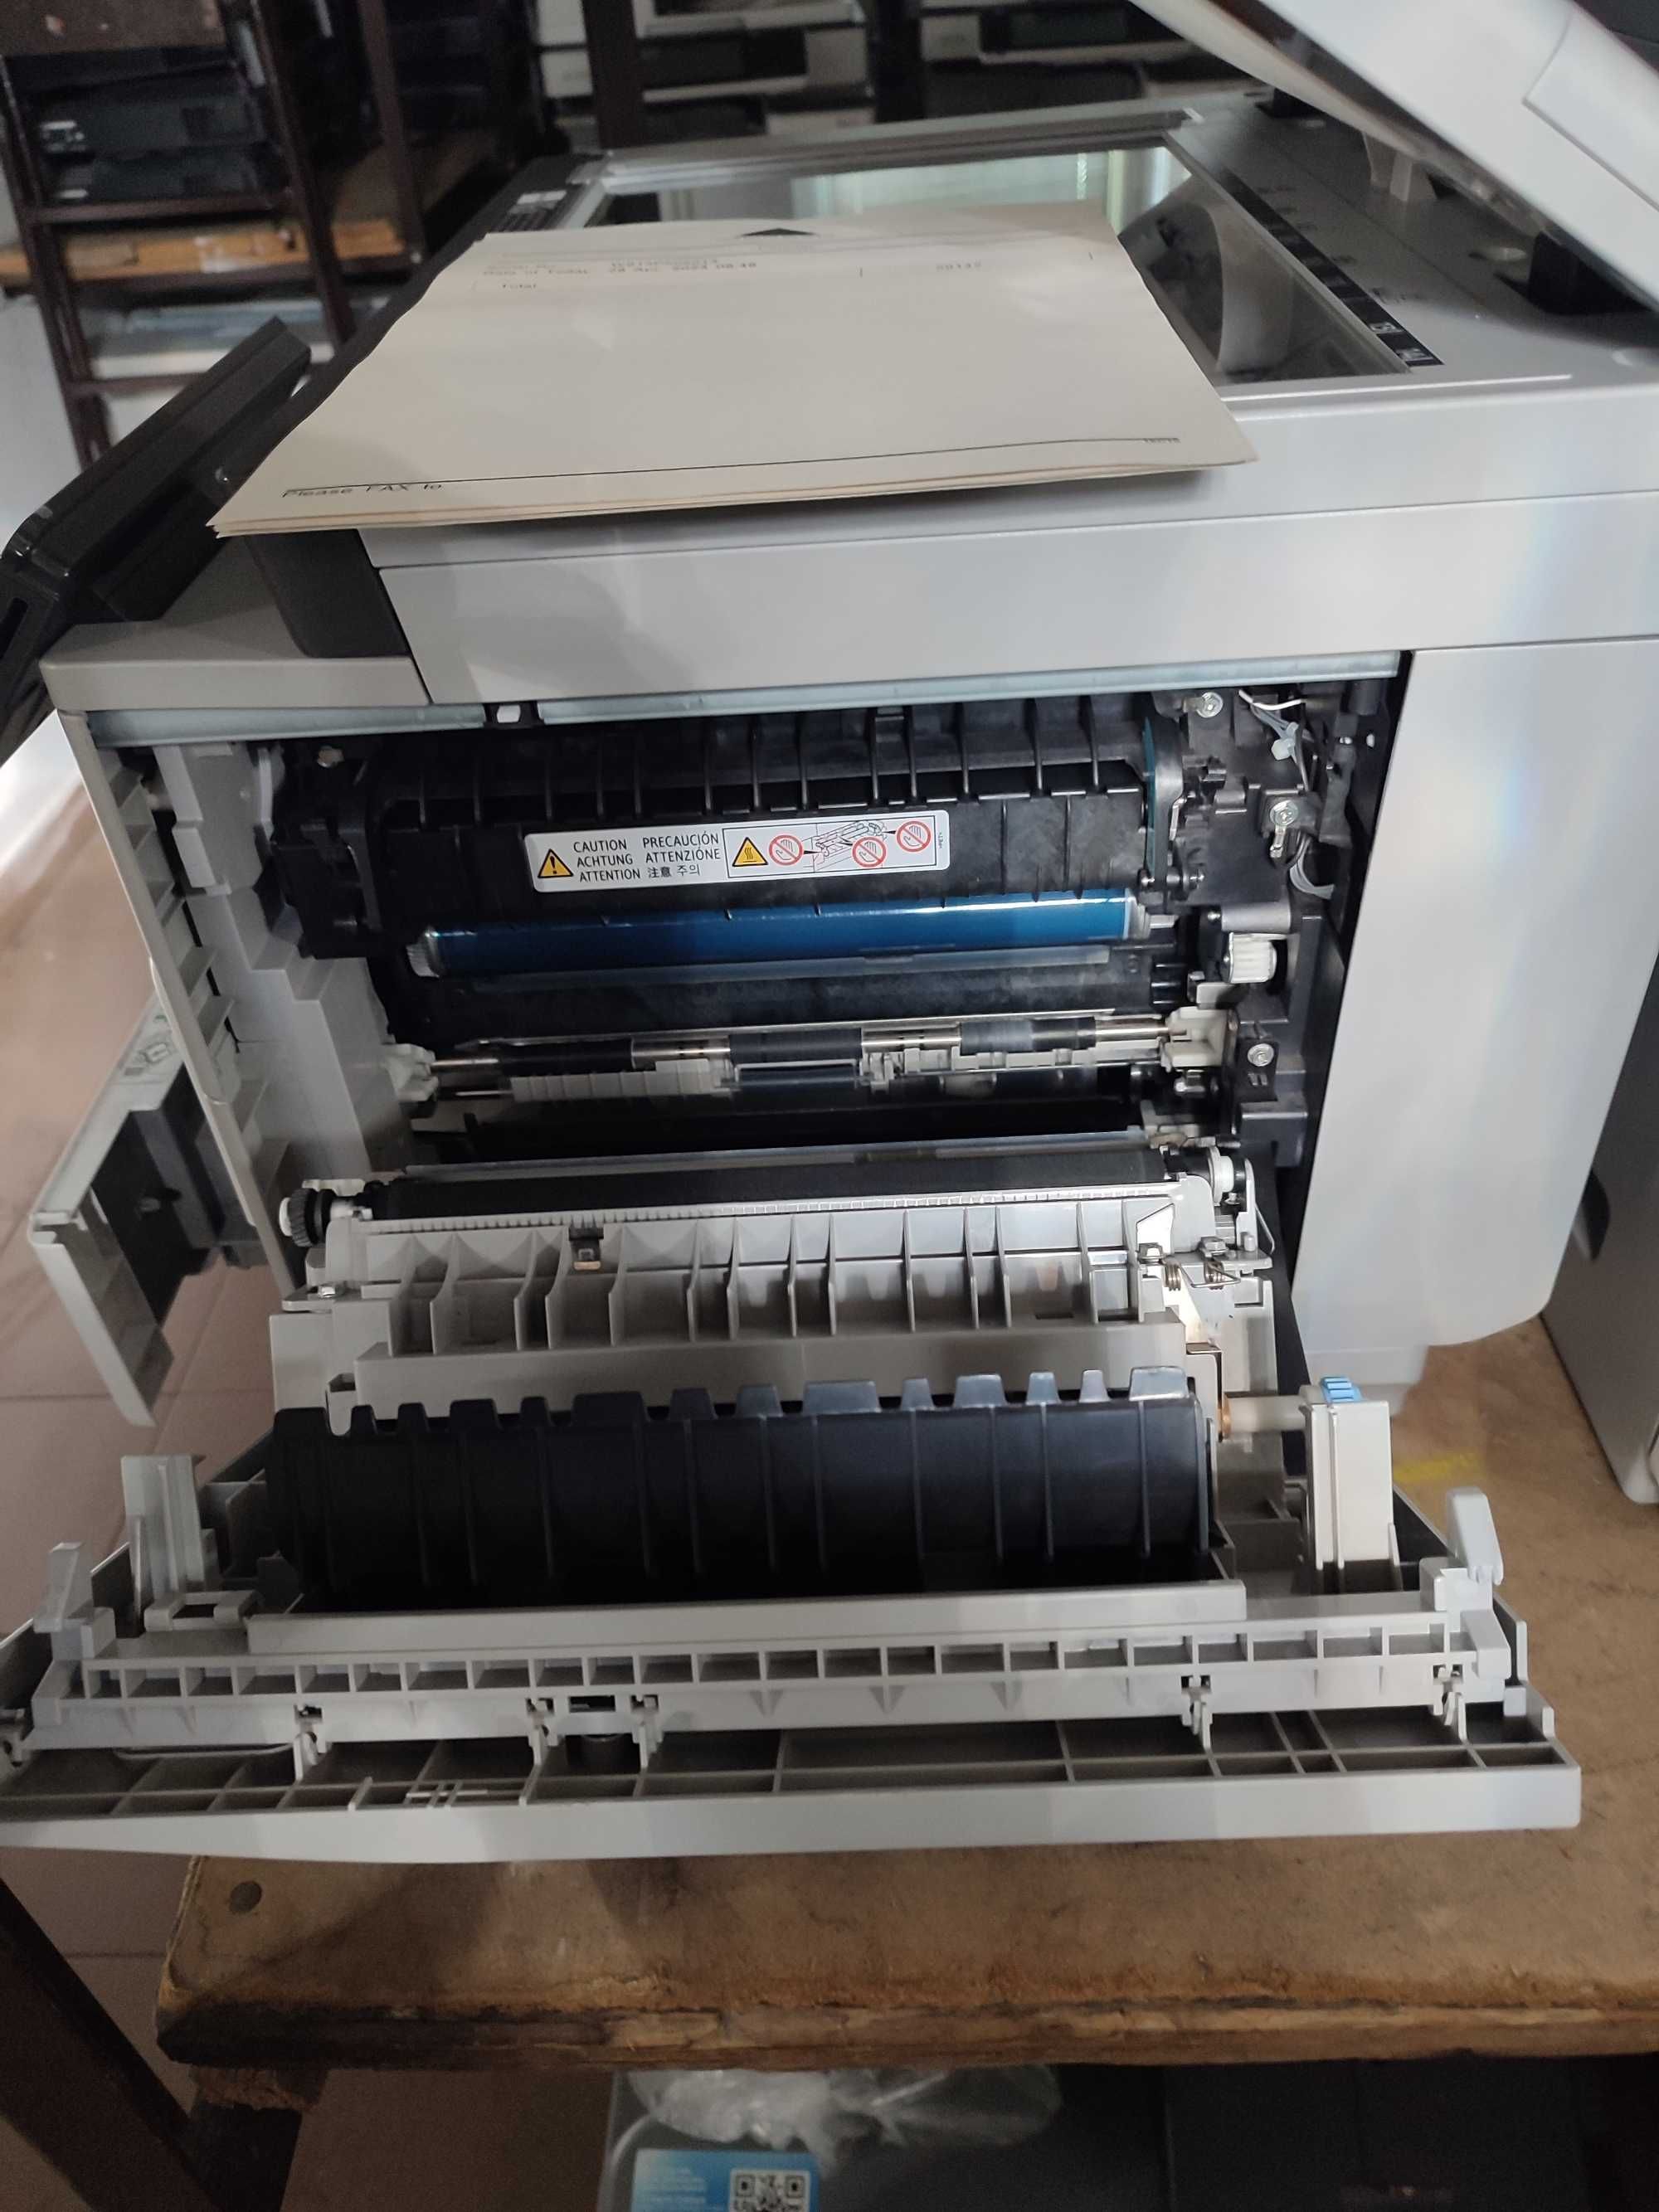 kserokopiarka drukarka a4 mono wielofunkcyjna Ricoh mp301spf